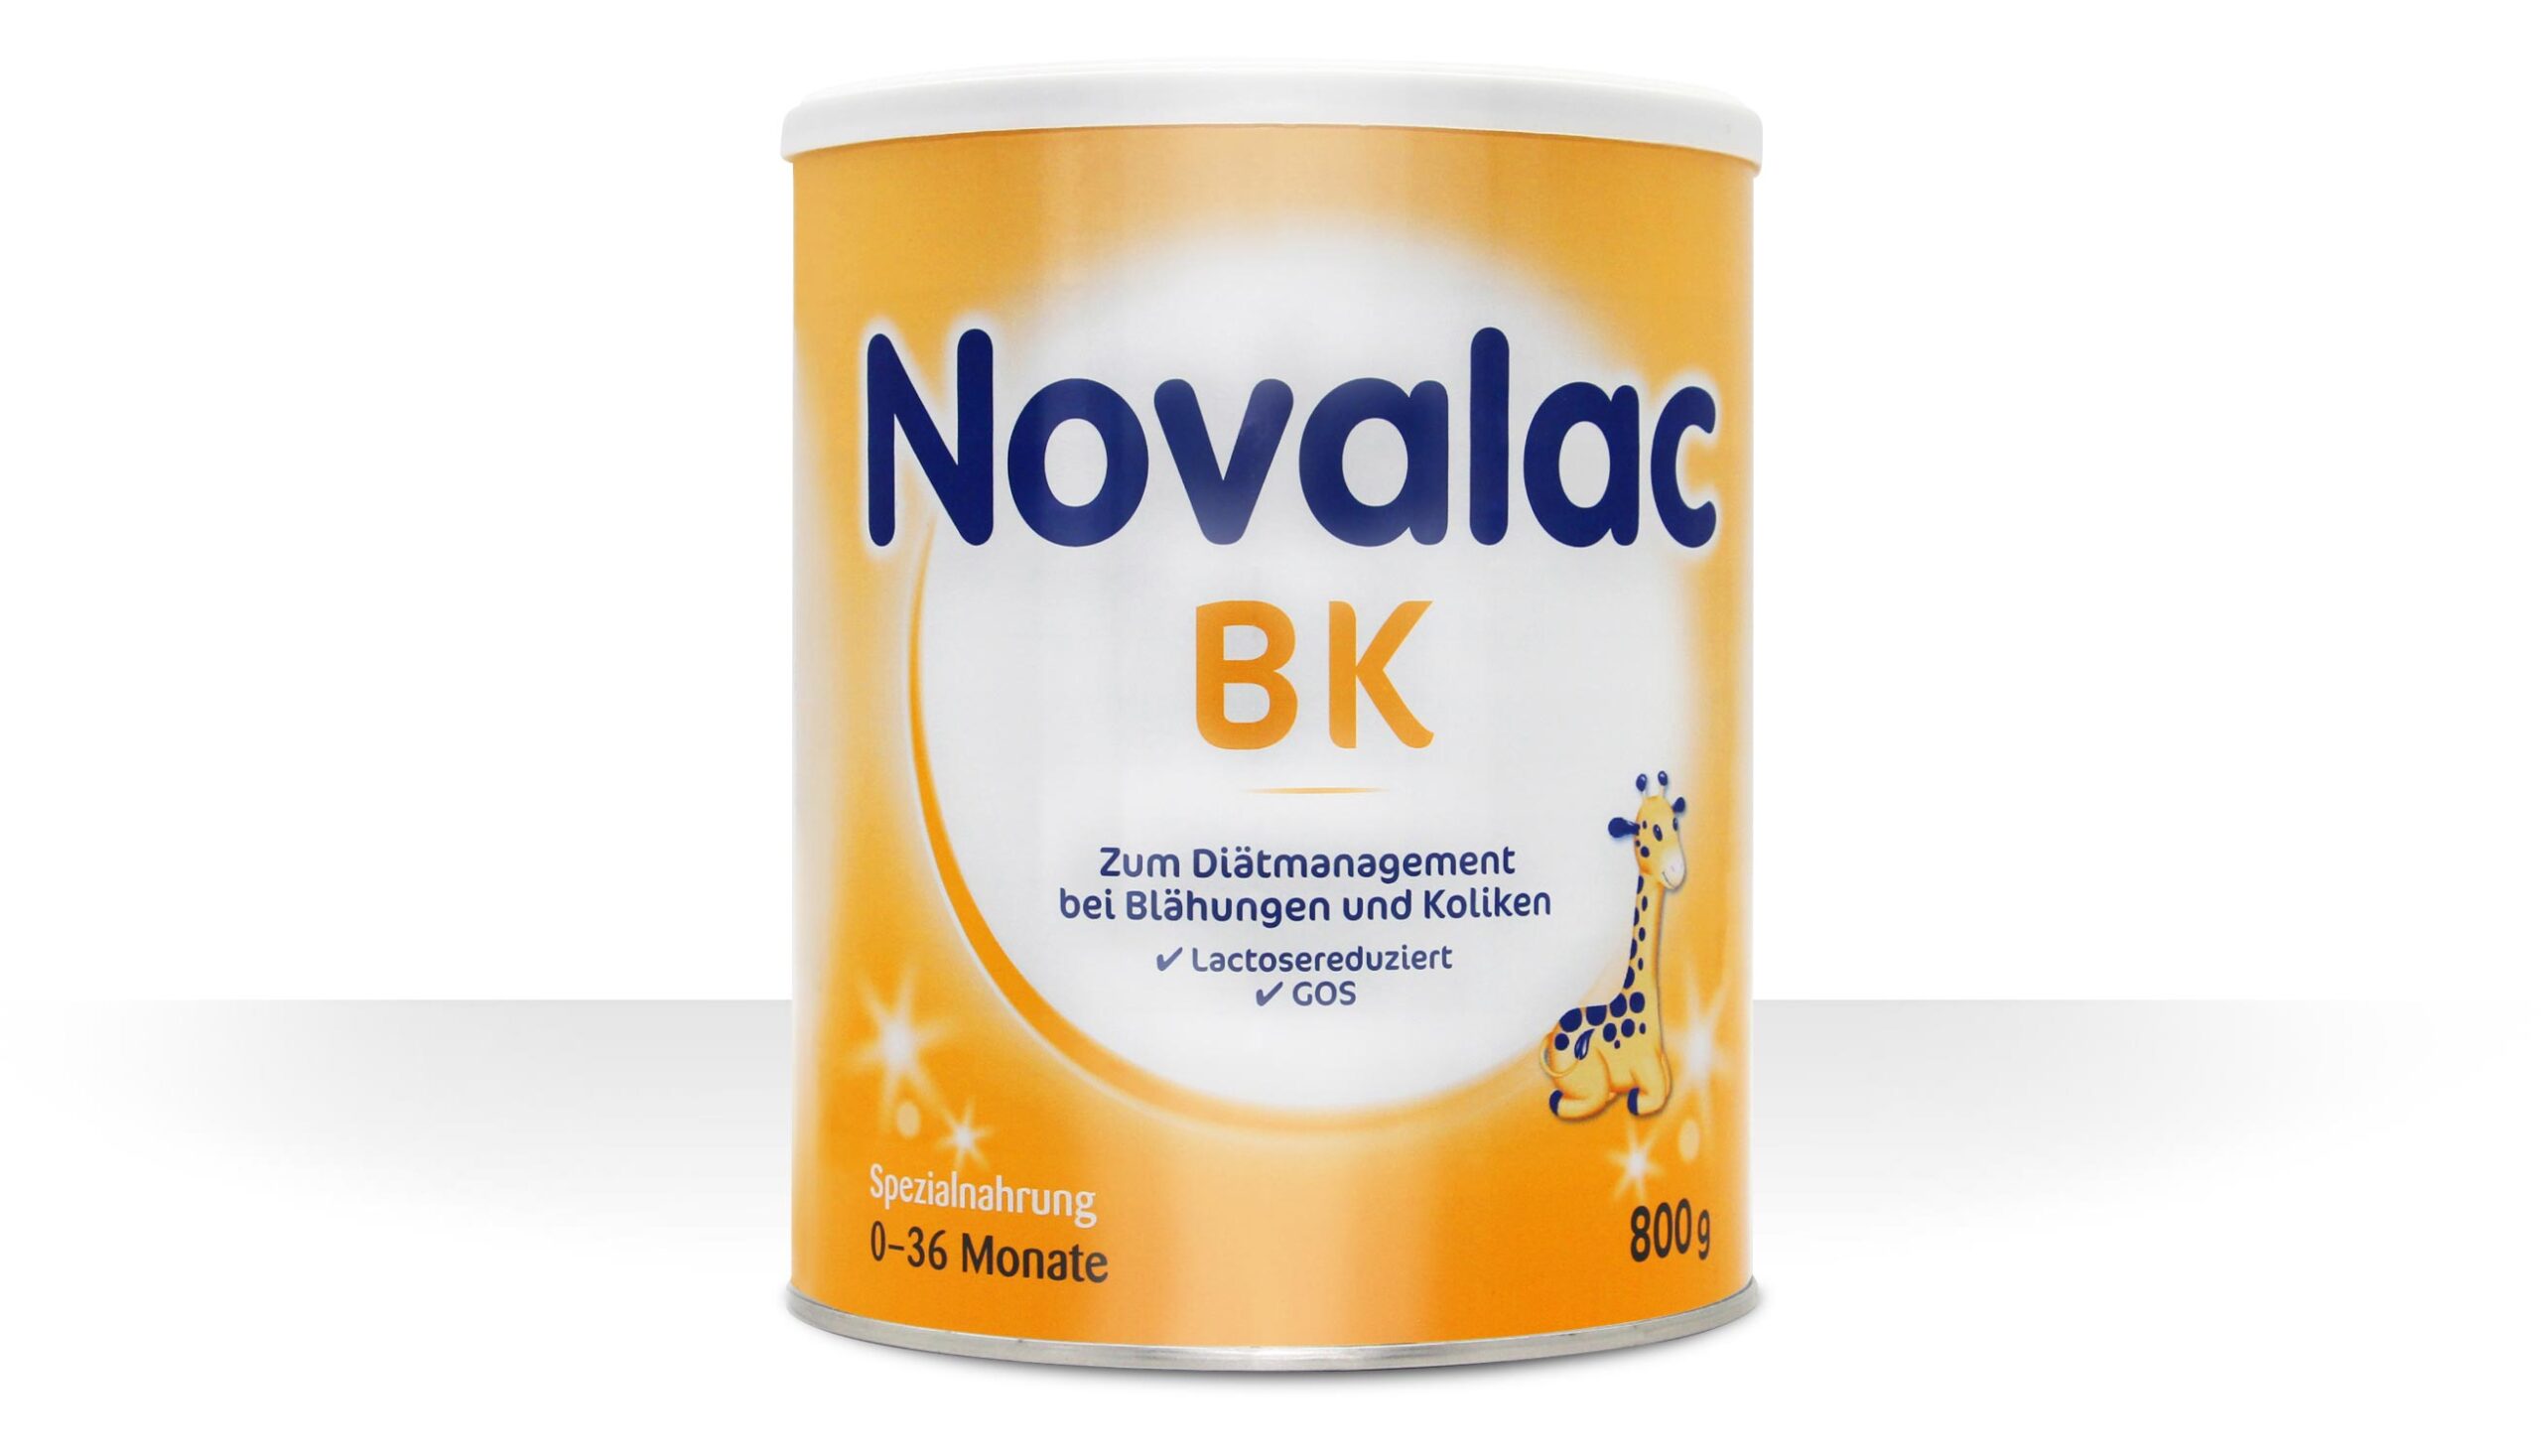 Novalac BK